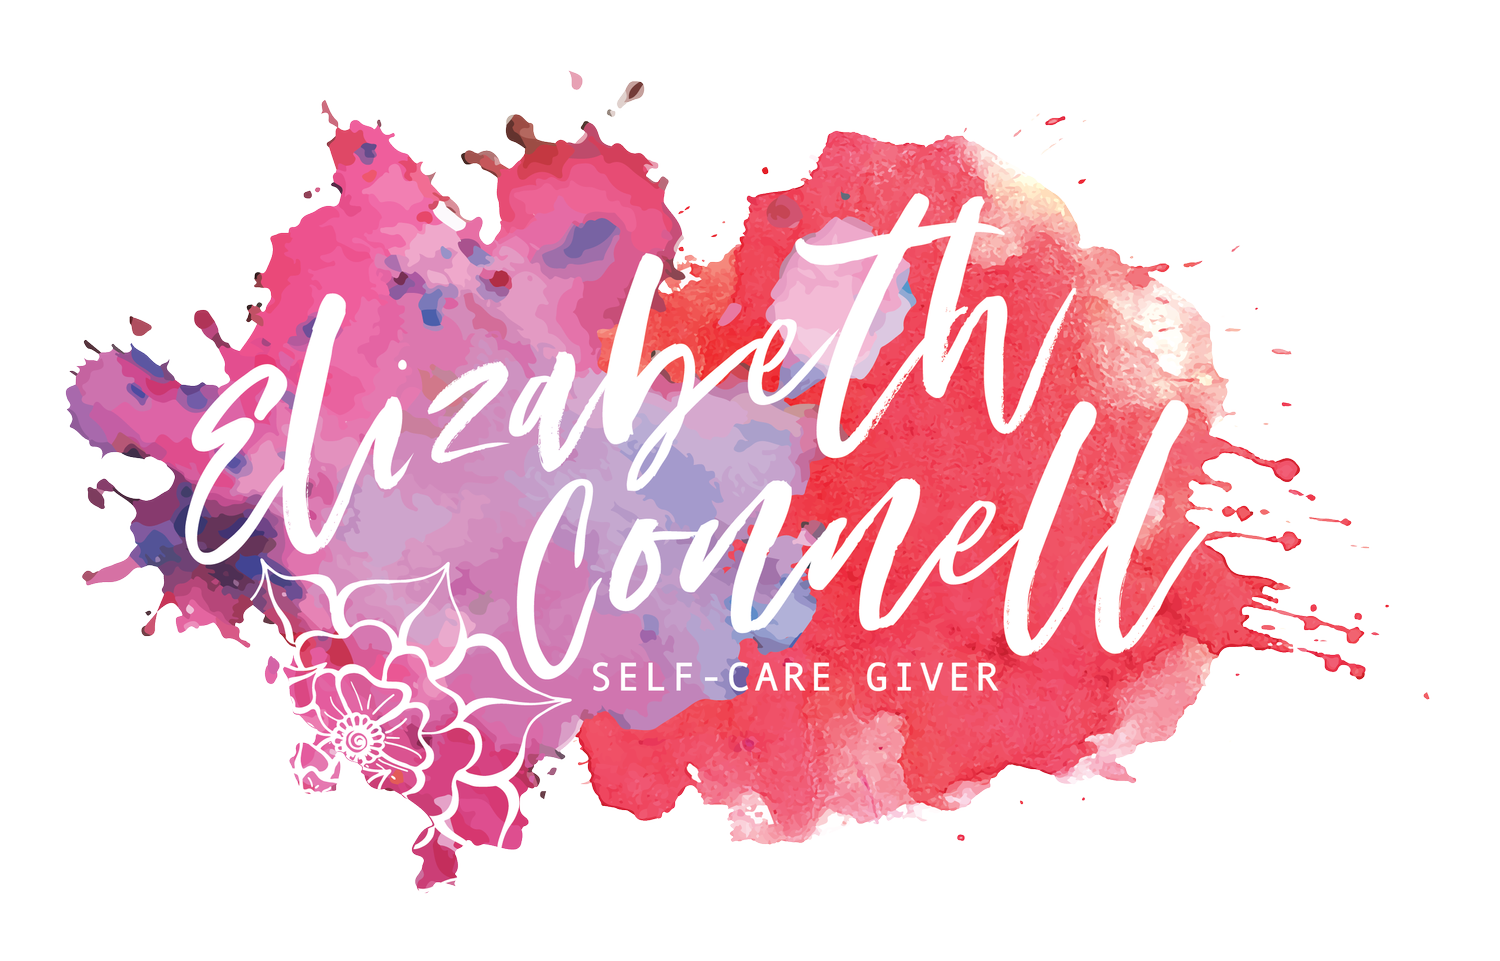 Elizabeth Connell Self-Care Giver